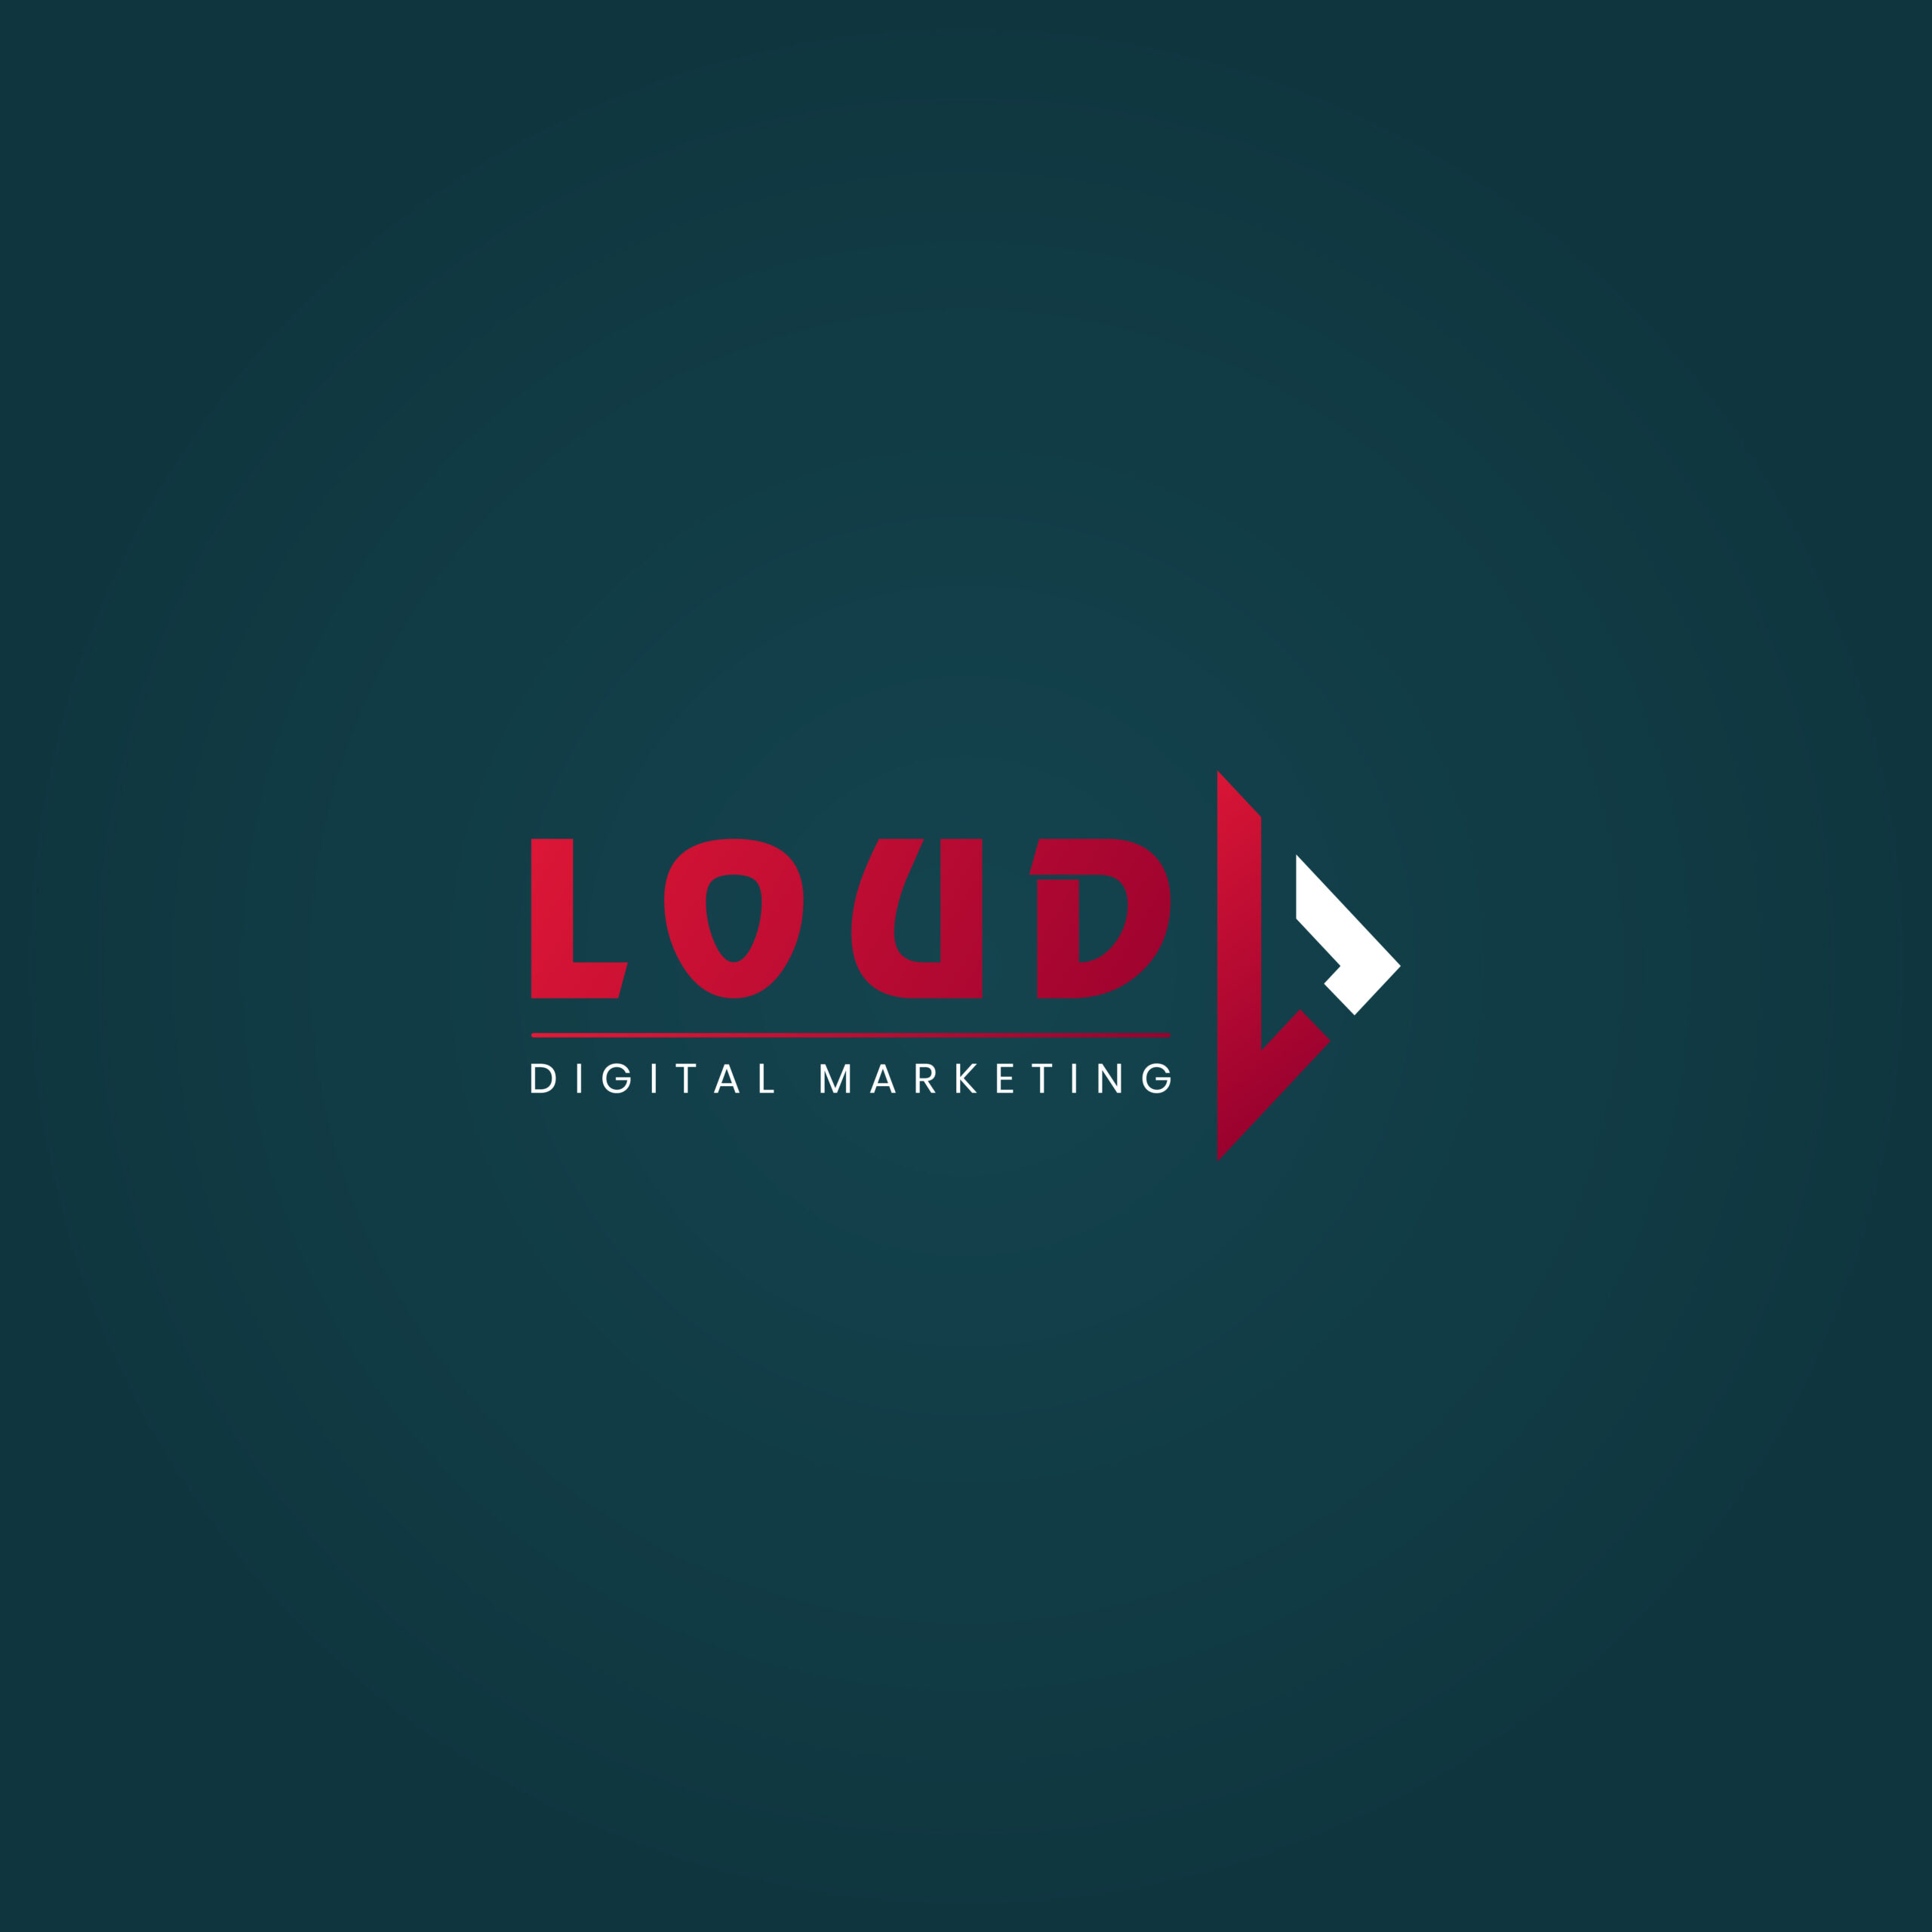 Loud Digital Marketing Services